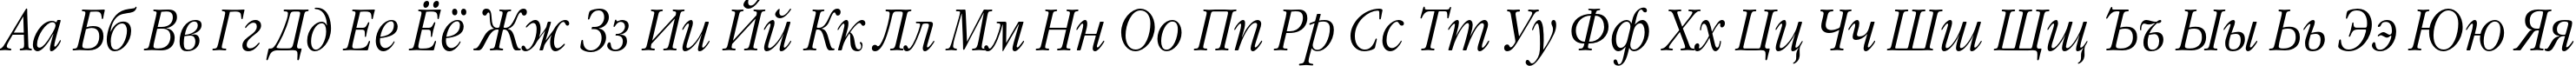 Пример написания русского алфавита шрифтом GaramondNarrowC Italic